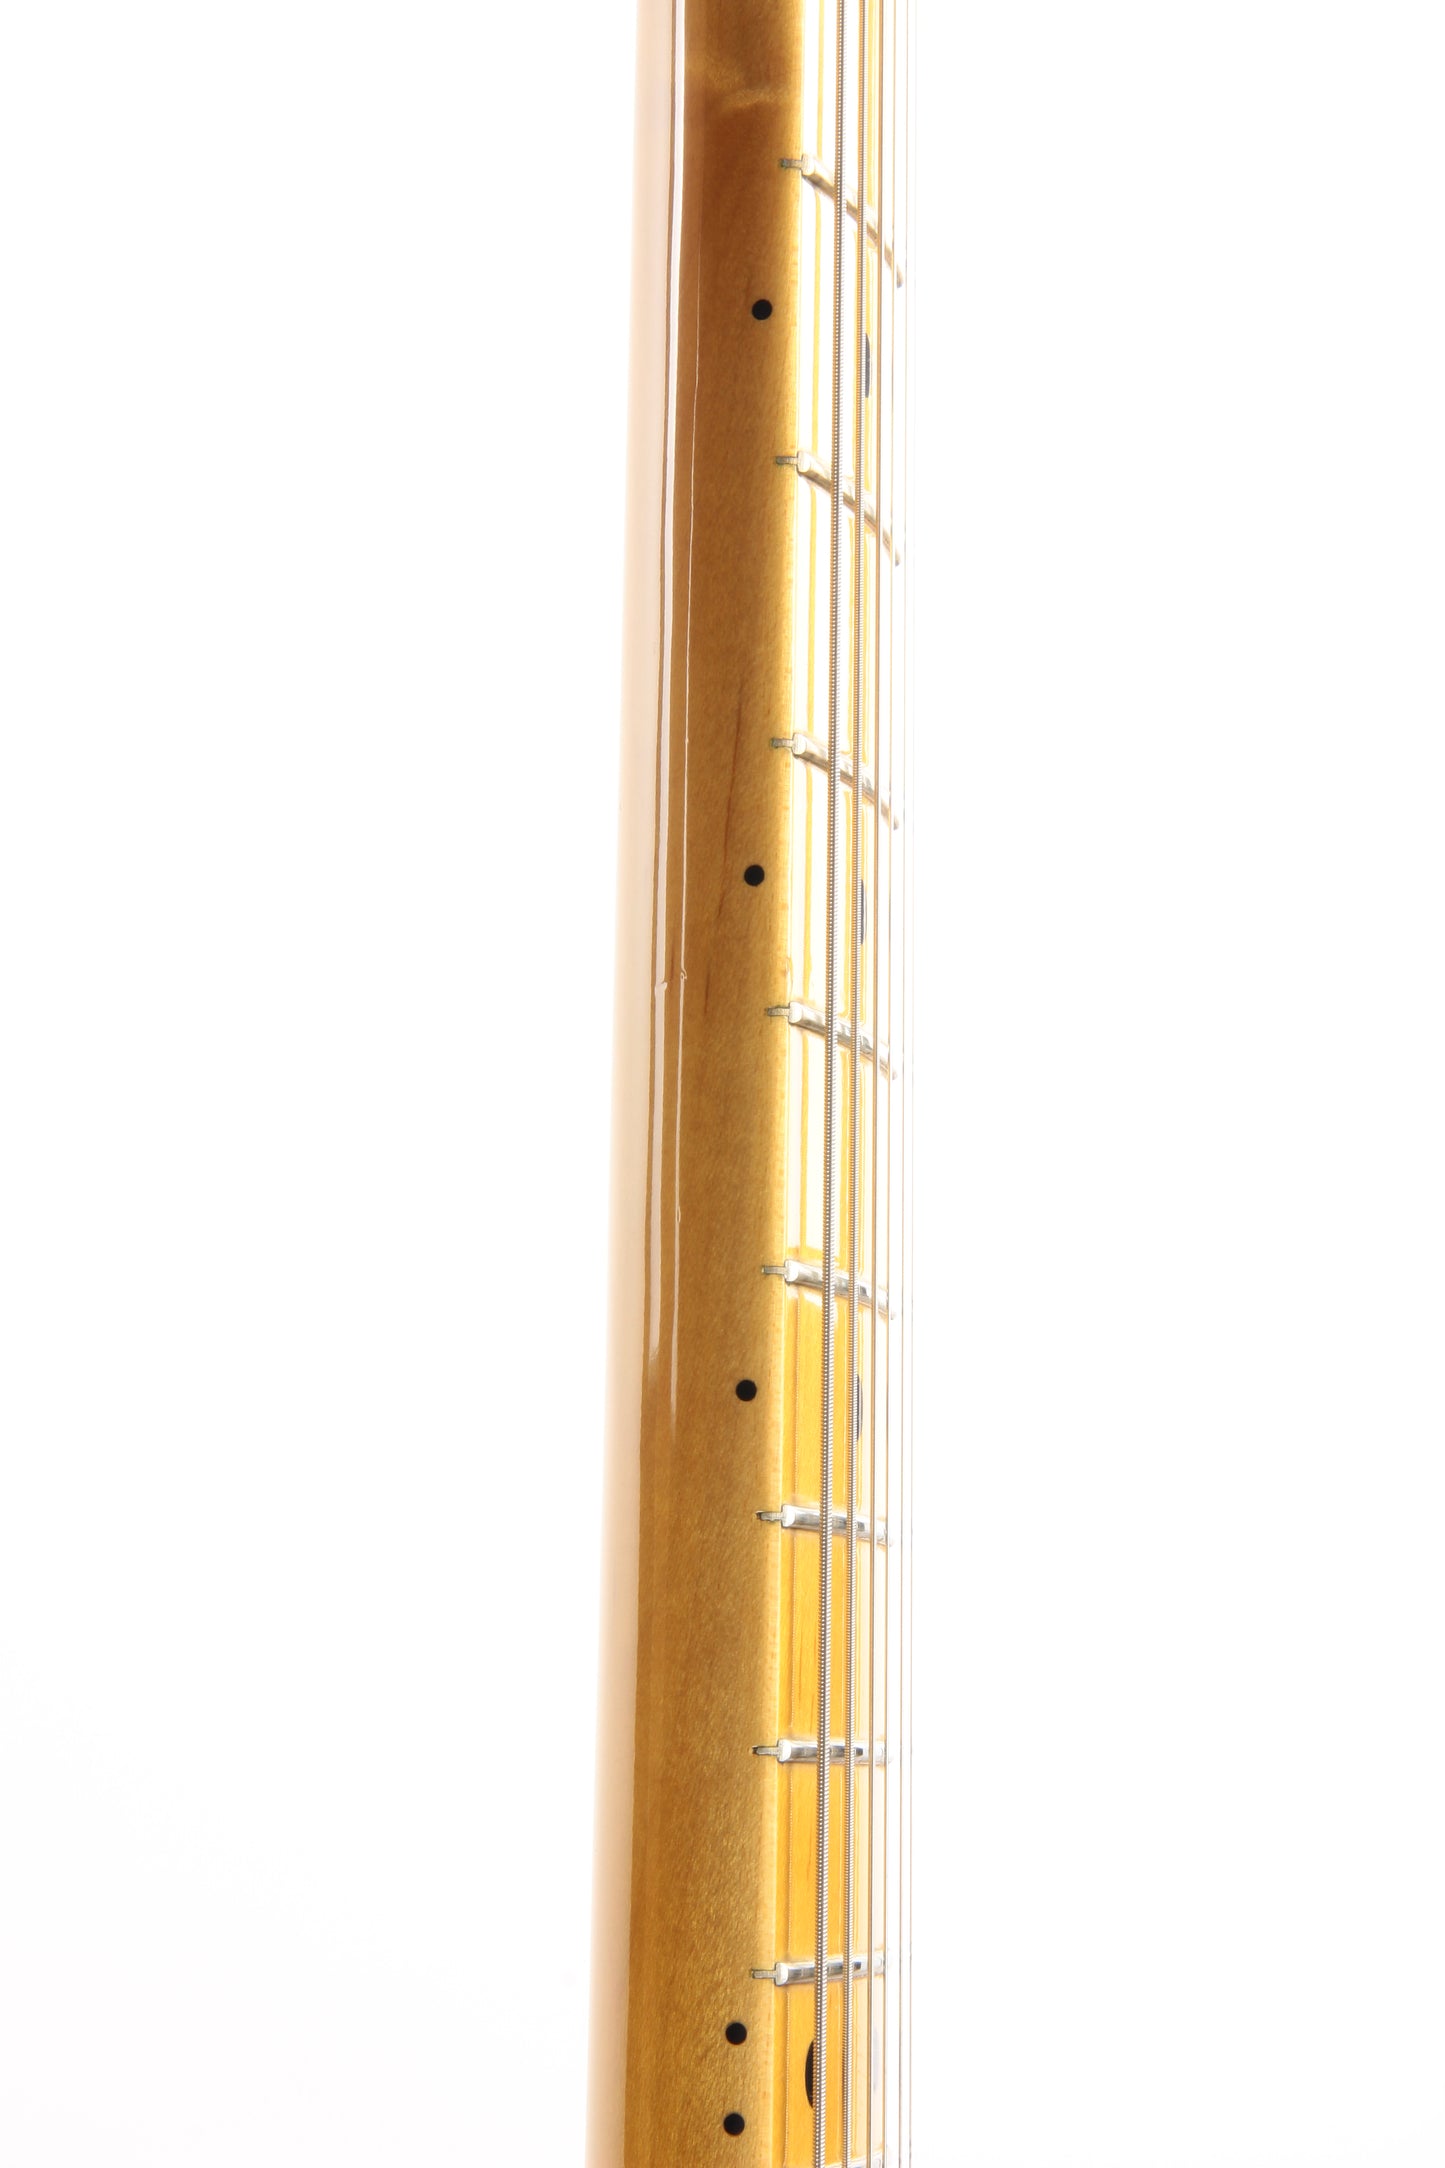 2002 Fender Japan '52 BIGSBY Telecaster 1952 Tele CIJ MIJ TL52 - Natural Ash w/ Hard Case